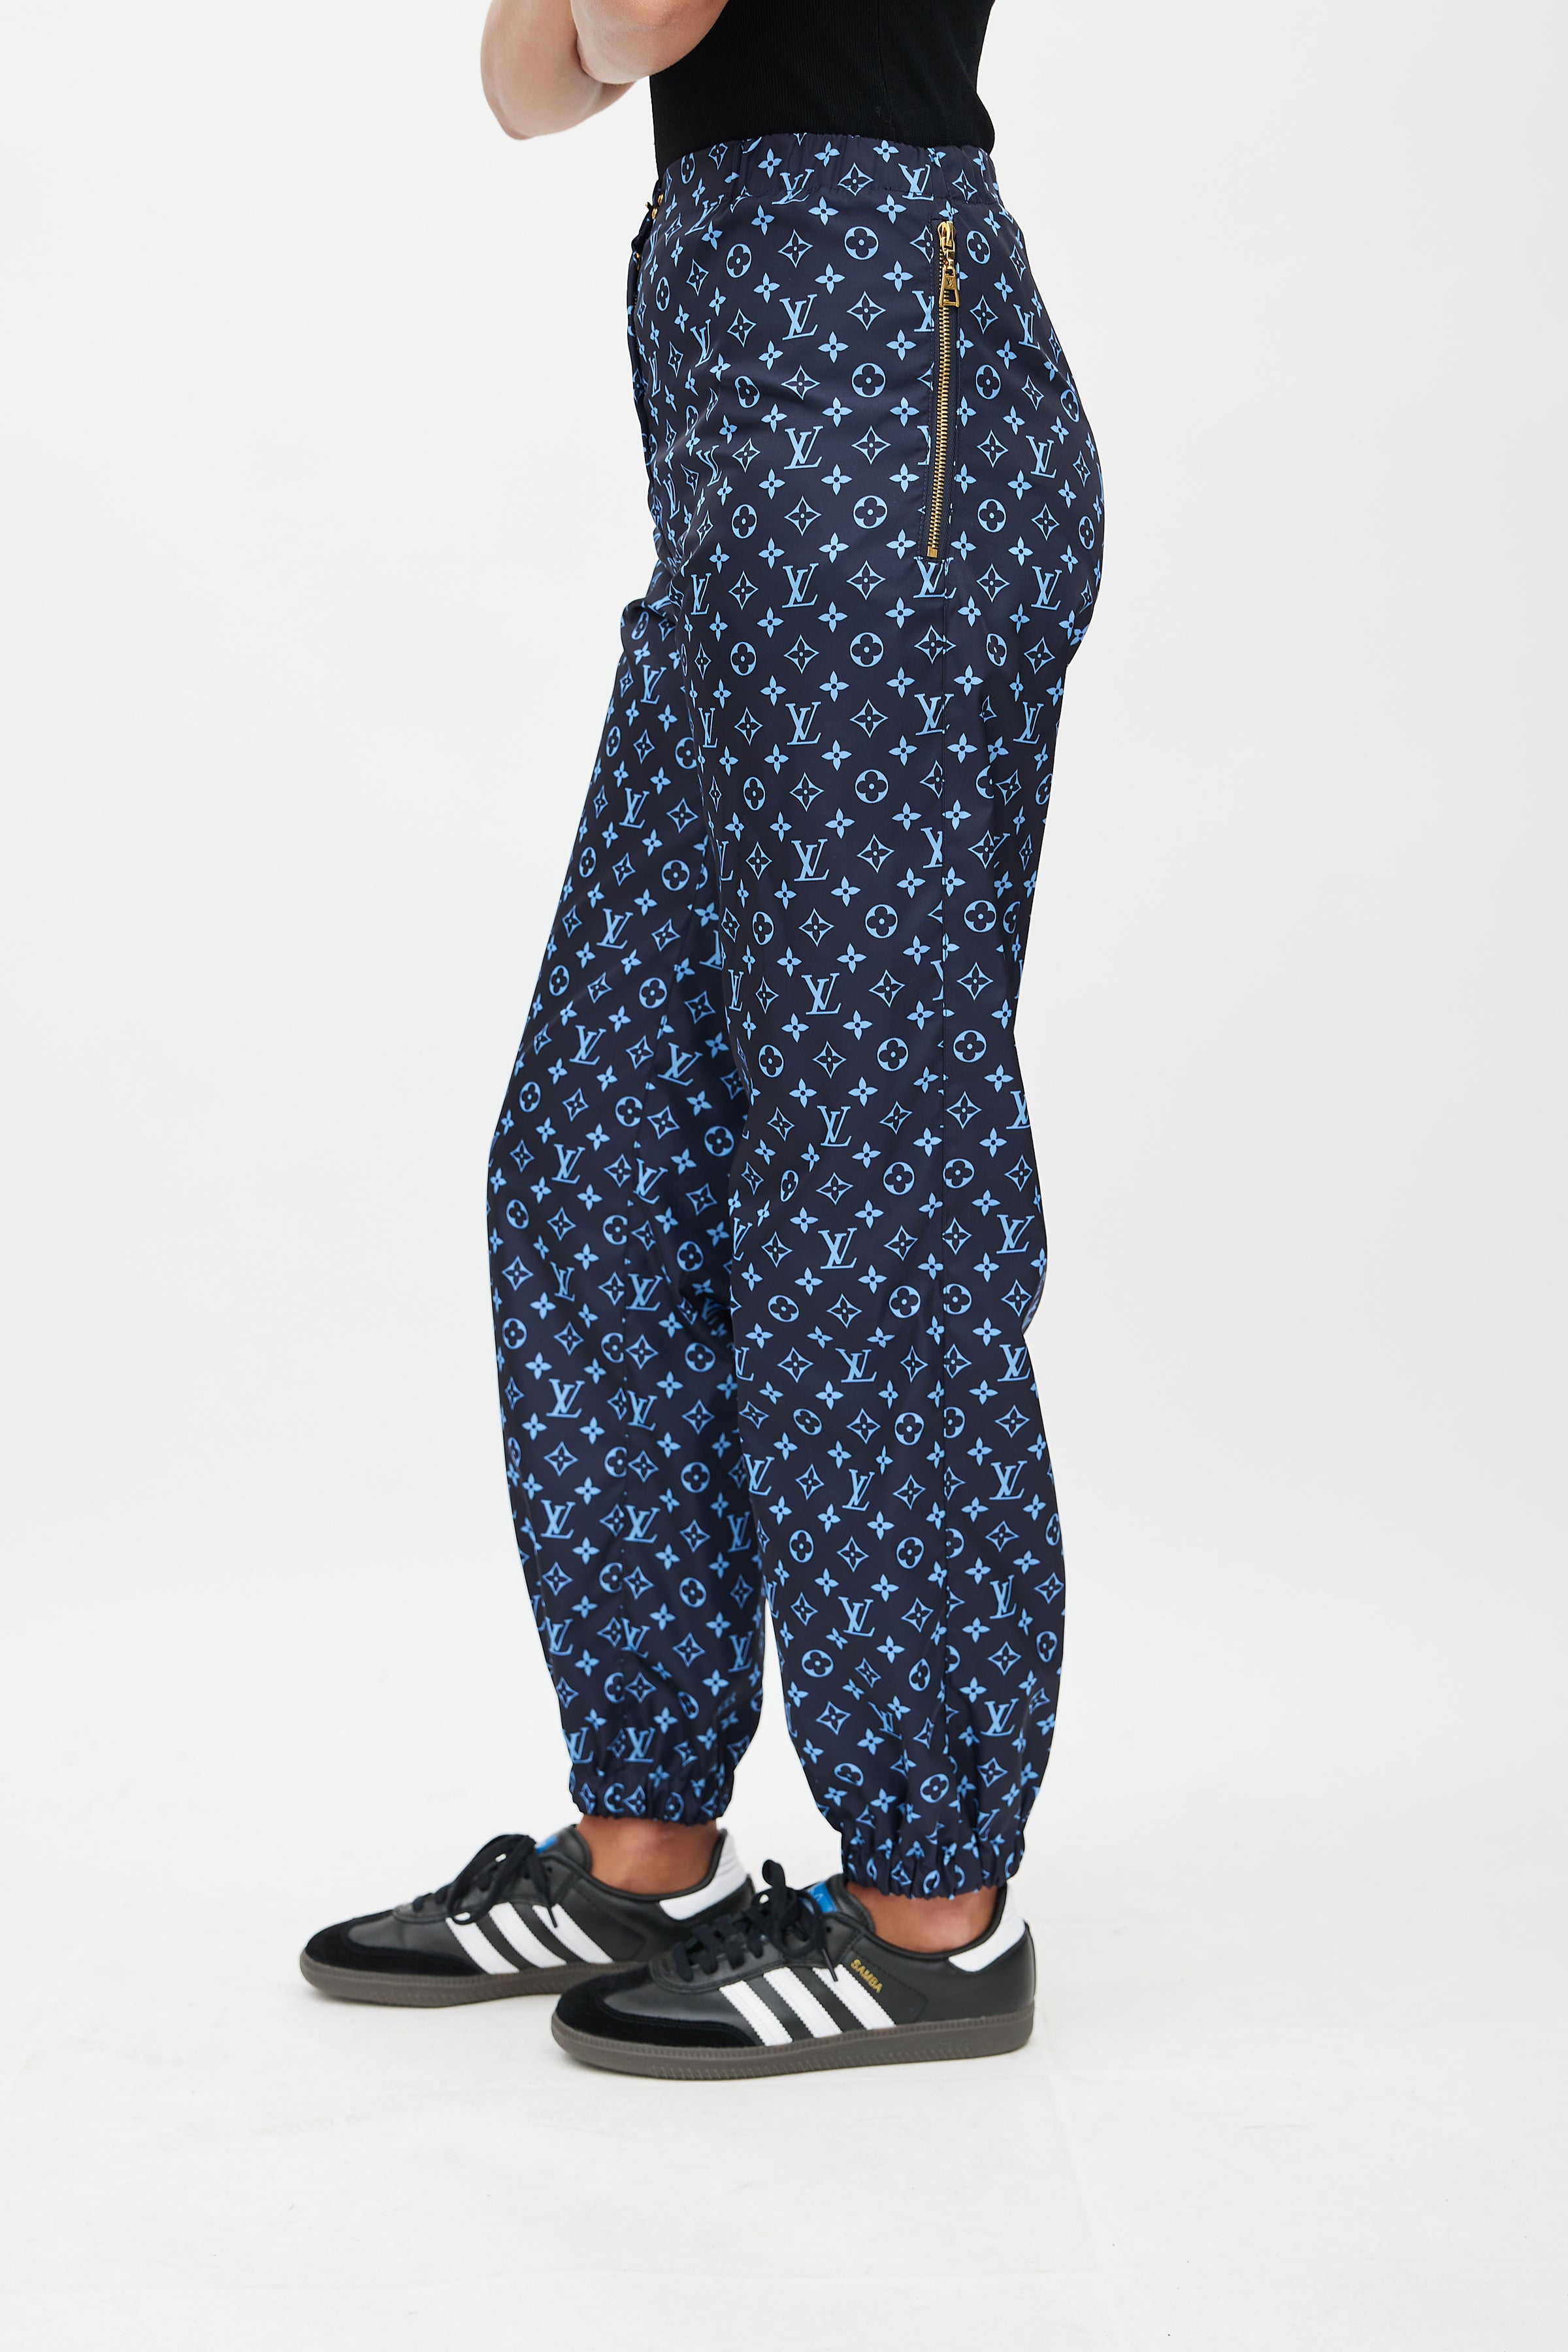 Louis Vuitton Monogram Pocket Jogging Pants Dark Night Blue. Size L0